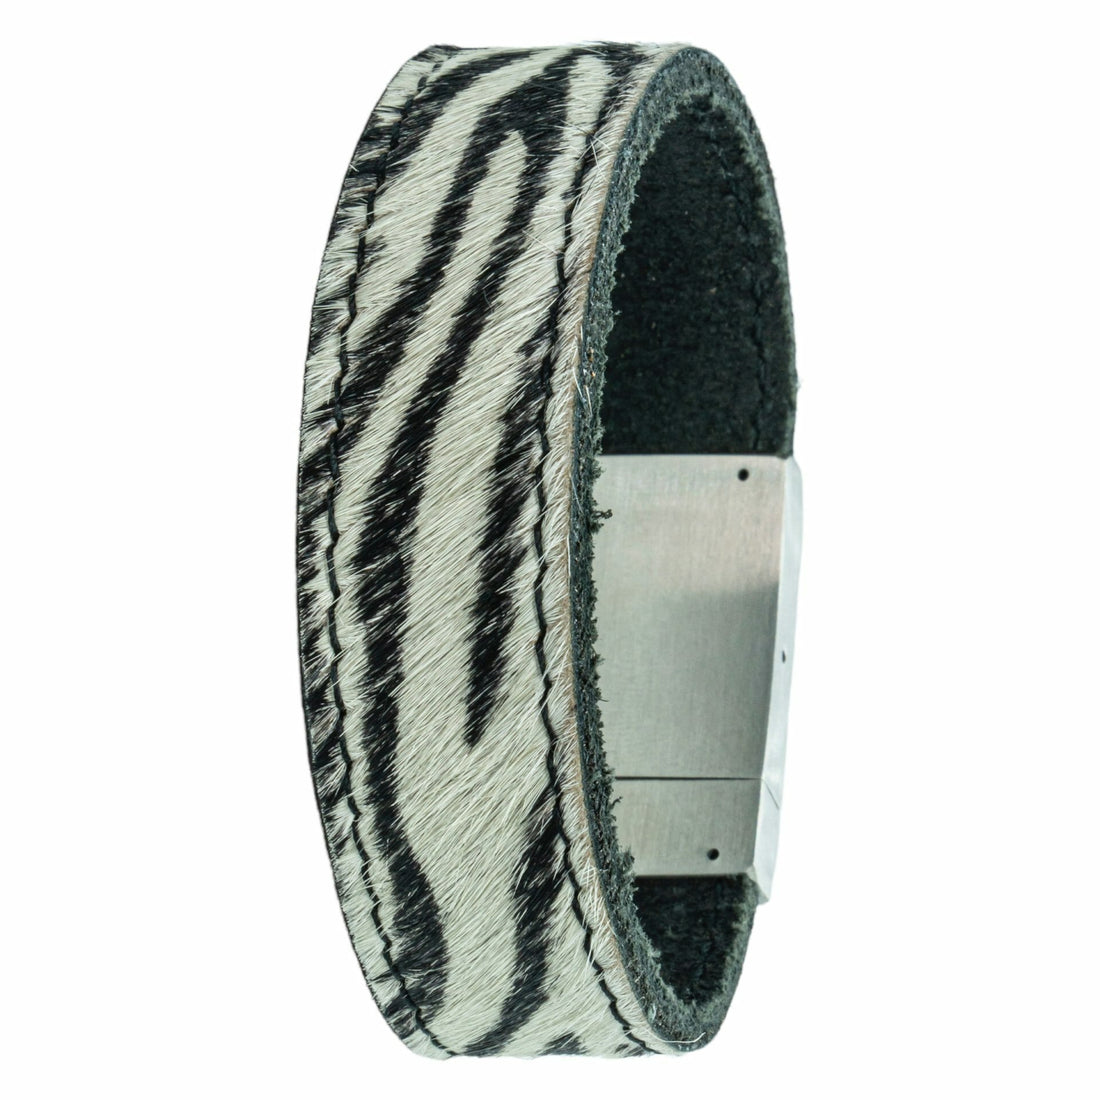 Eigenes Pfotenabdruck-Armband aus <b>Zebra-</b> Leder